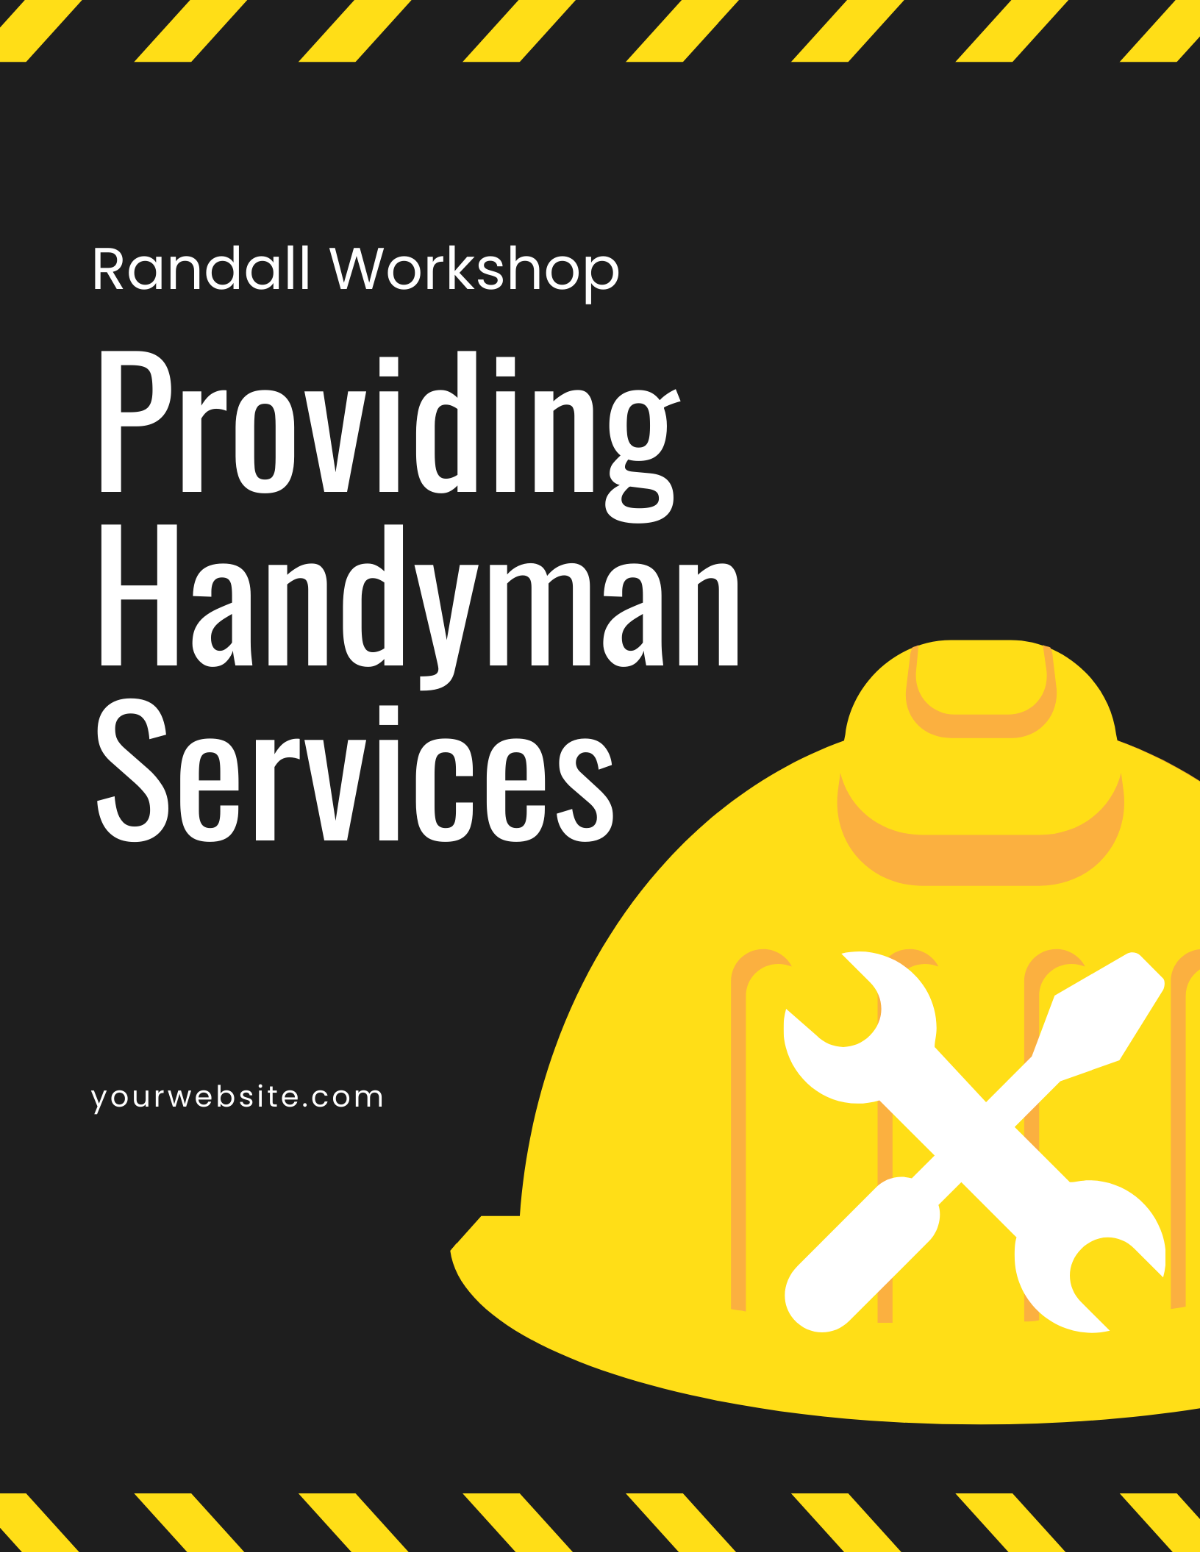 Simple Handyman Services Flyer Template